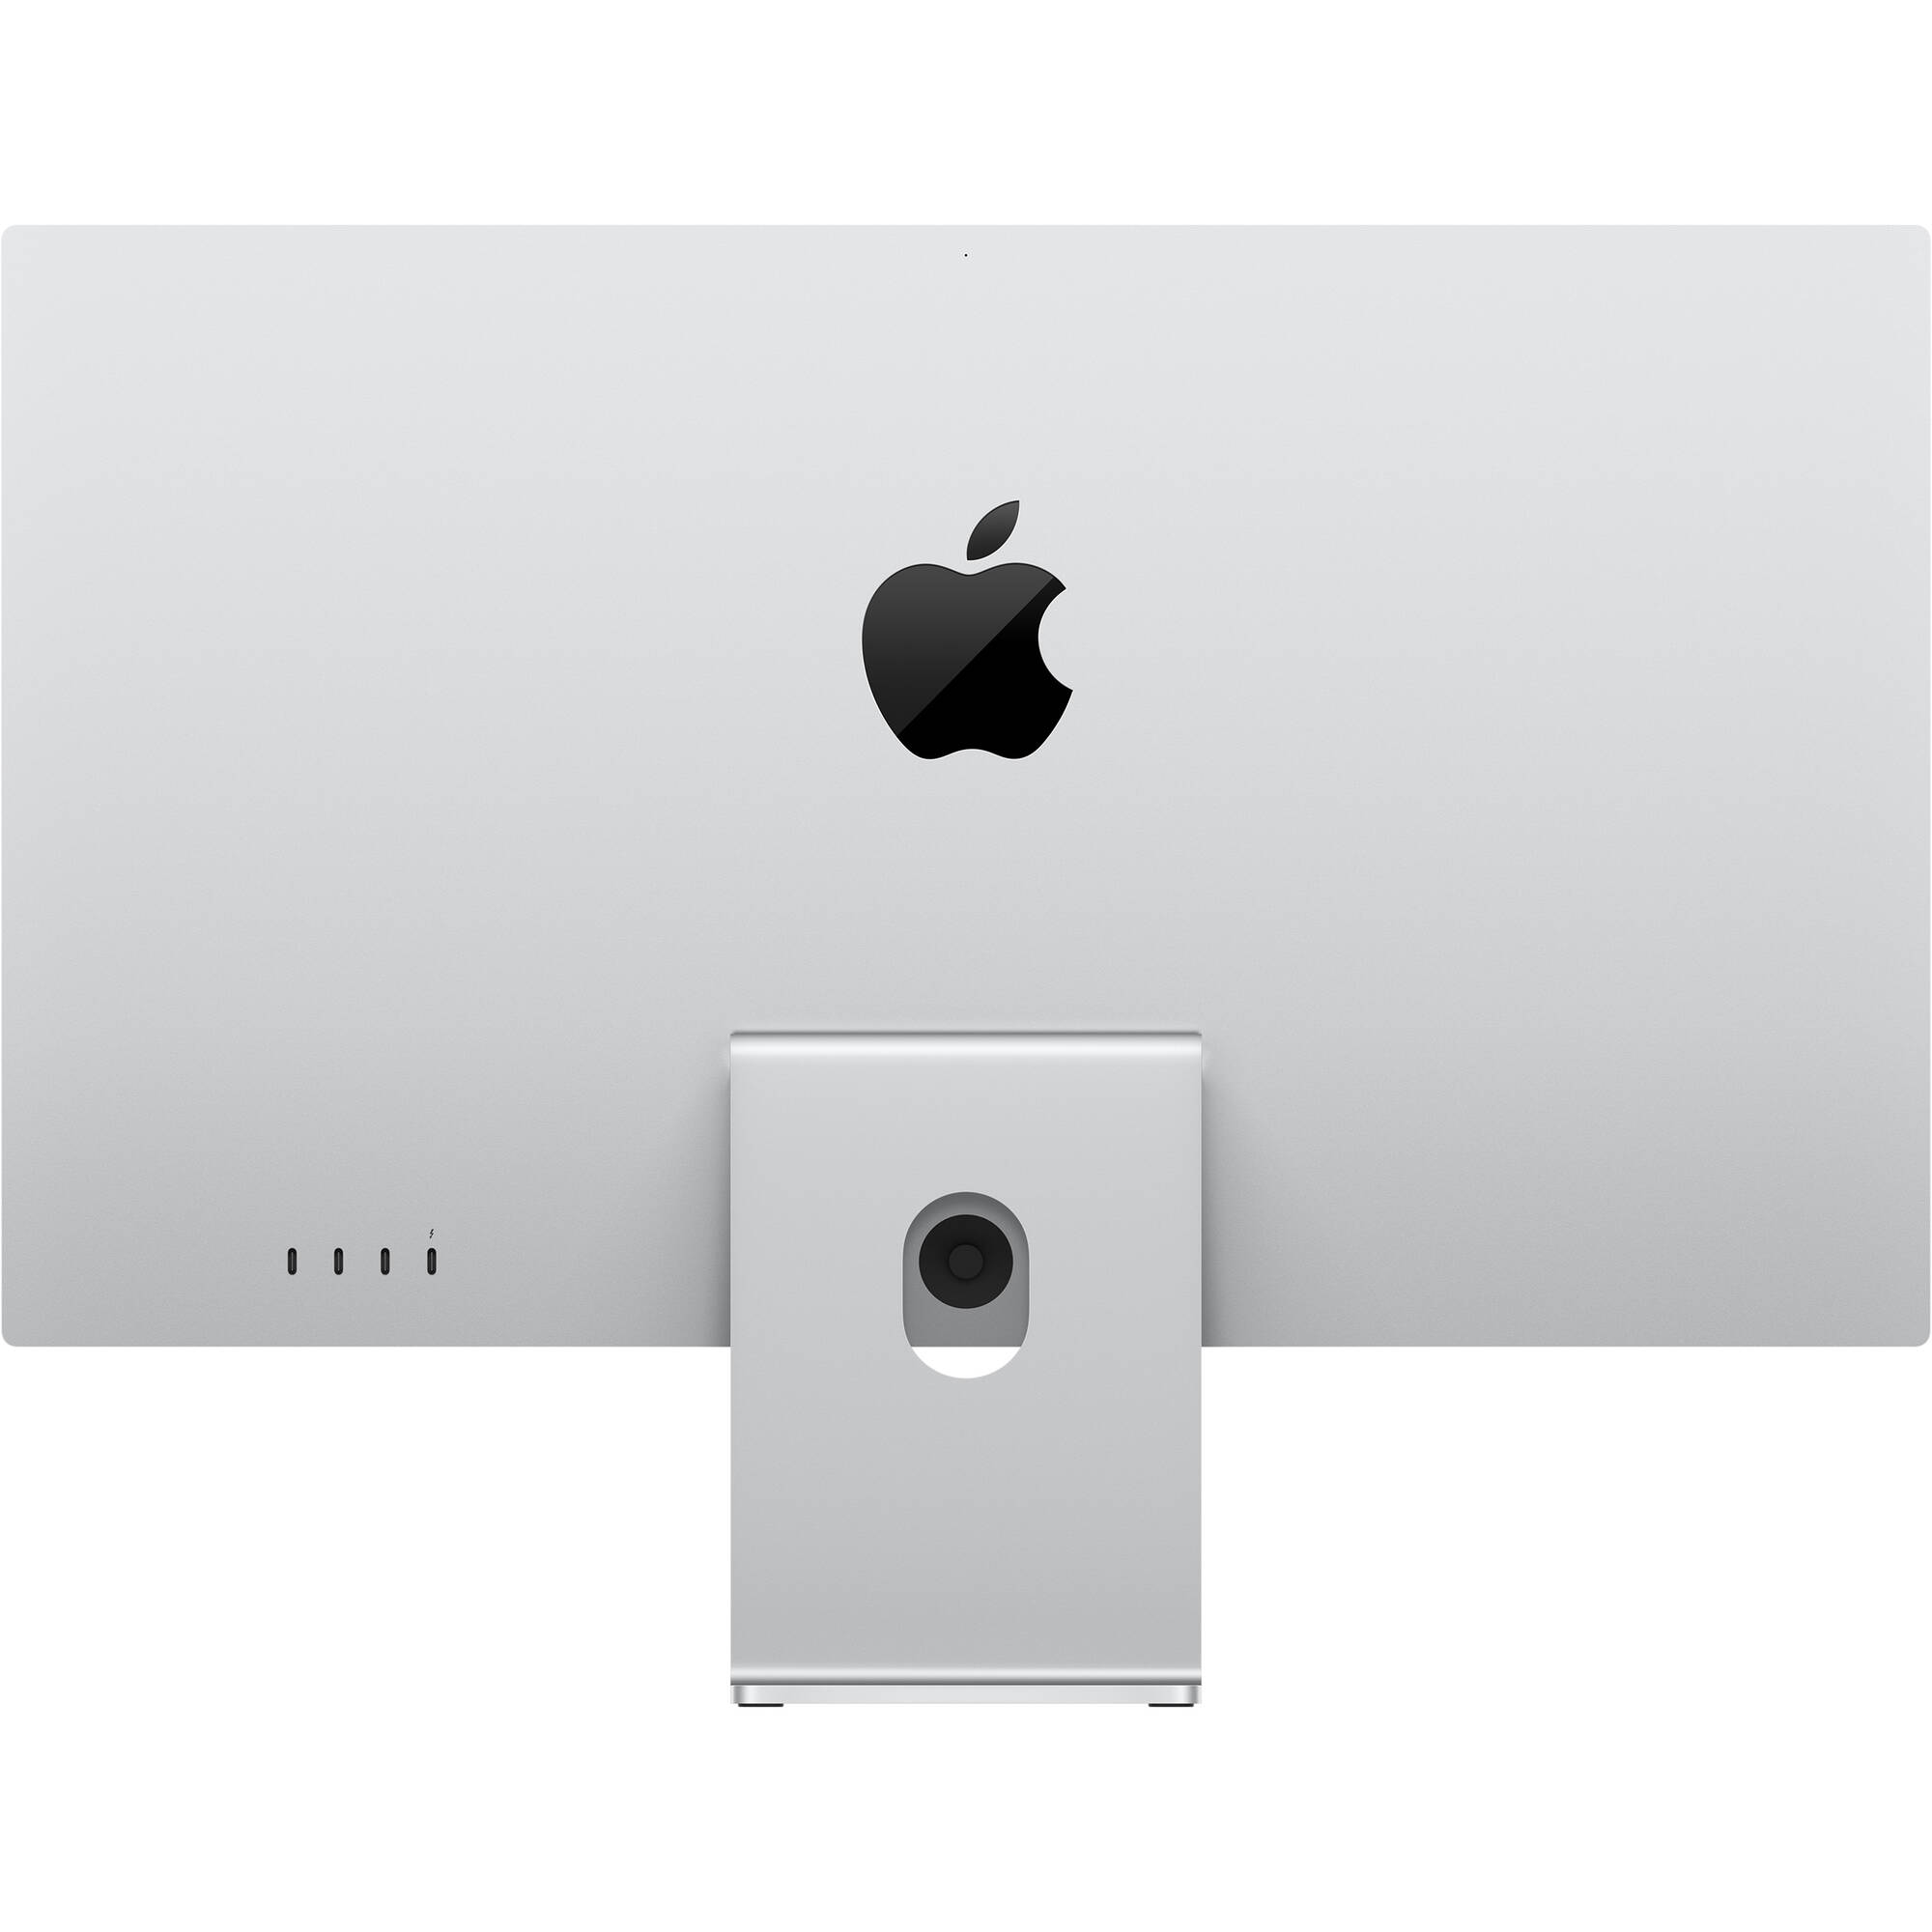 Display Studio de Apple 27 "(Vesa Adaptador de montura VESA)